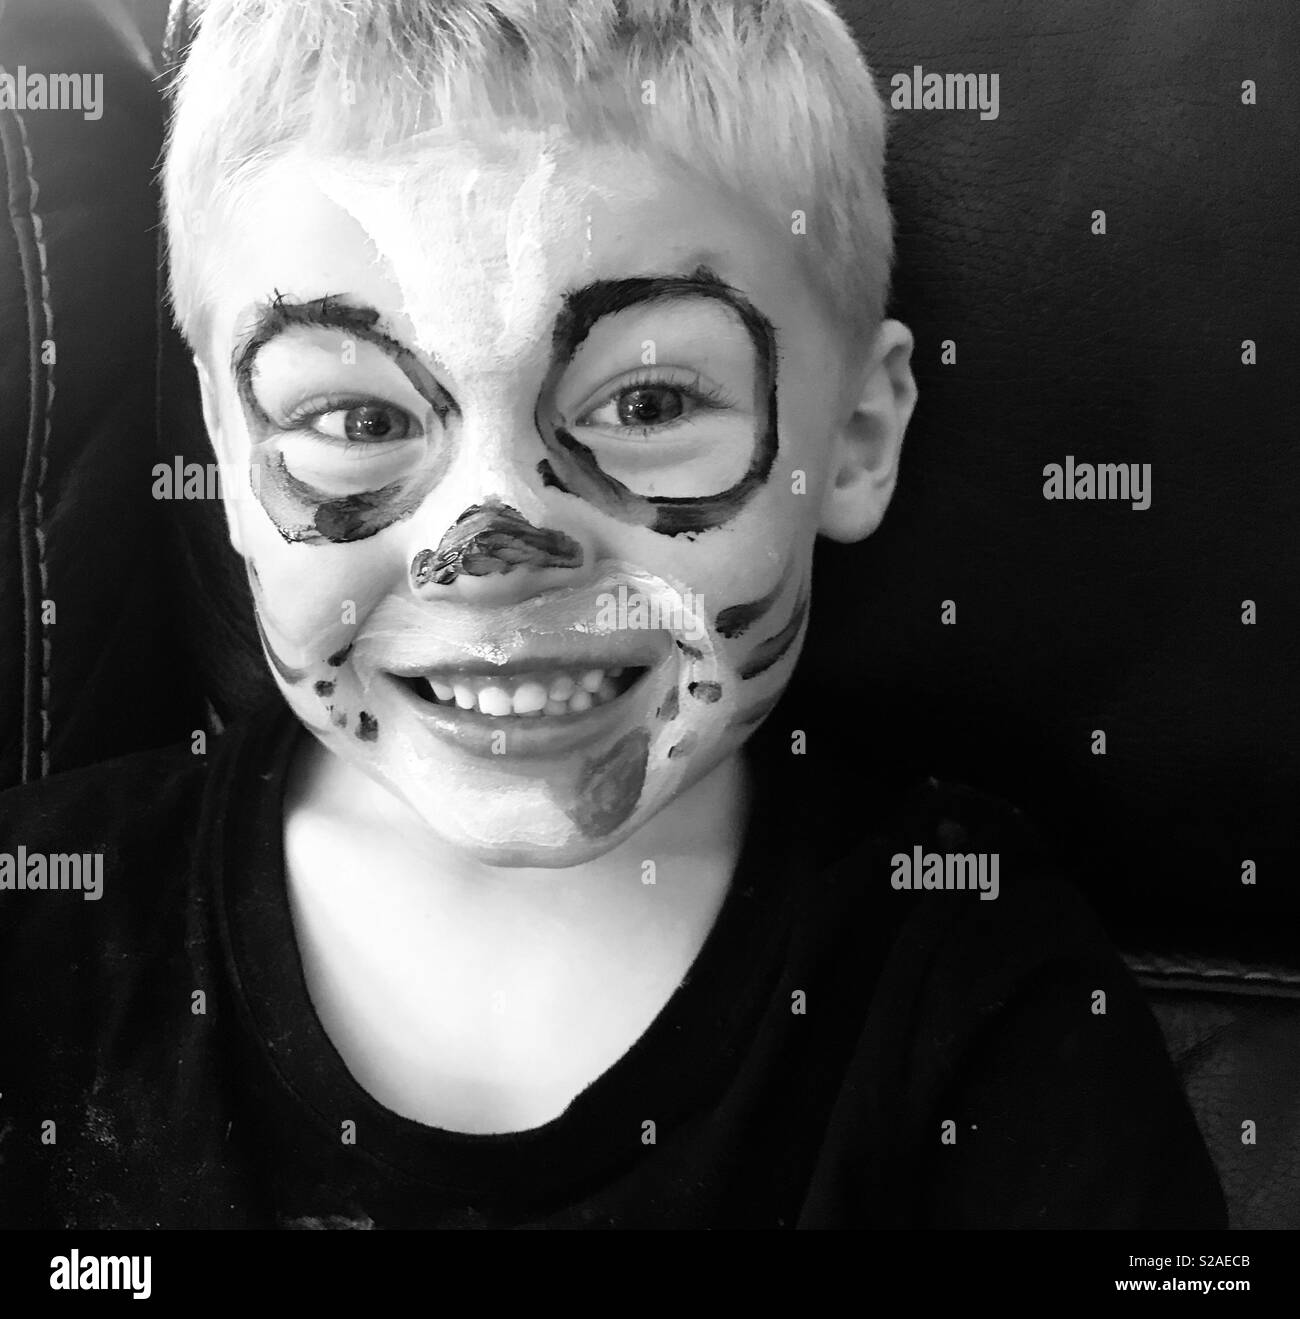 Niño con cara pintada de perro fotografías e imágenes de alta resolución -  Alamy